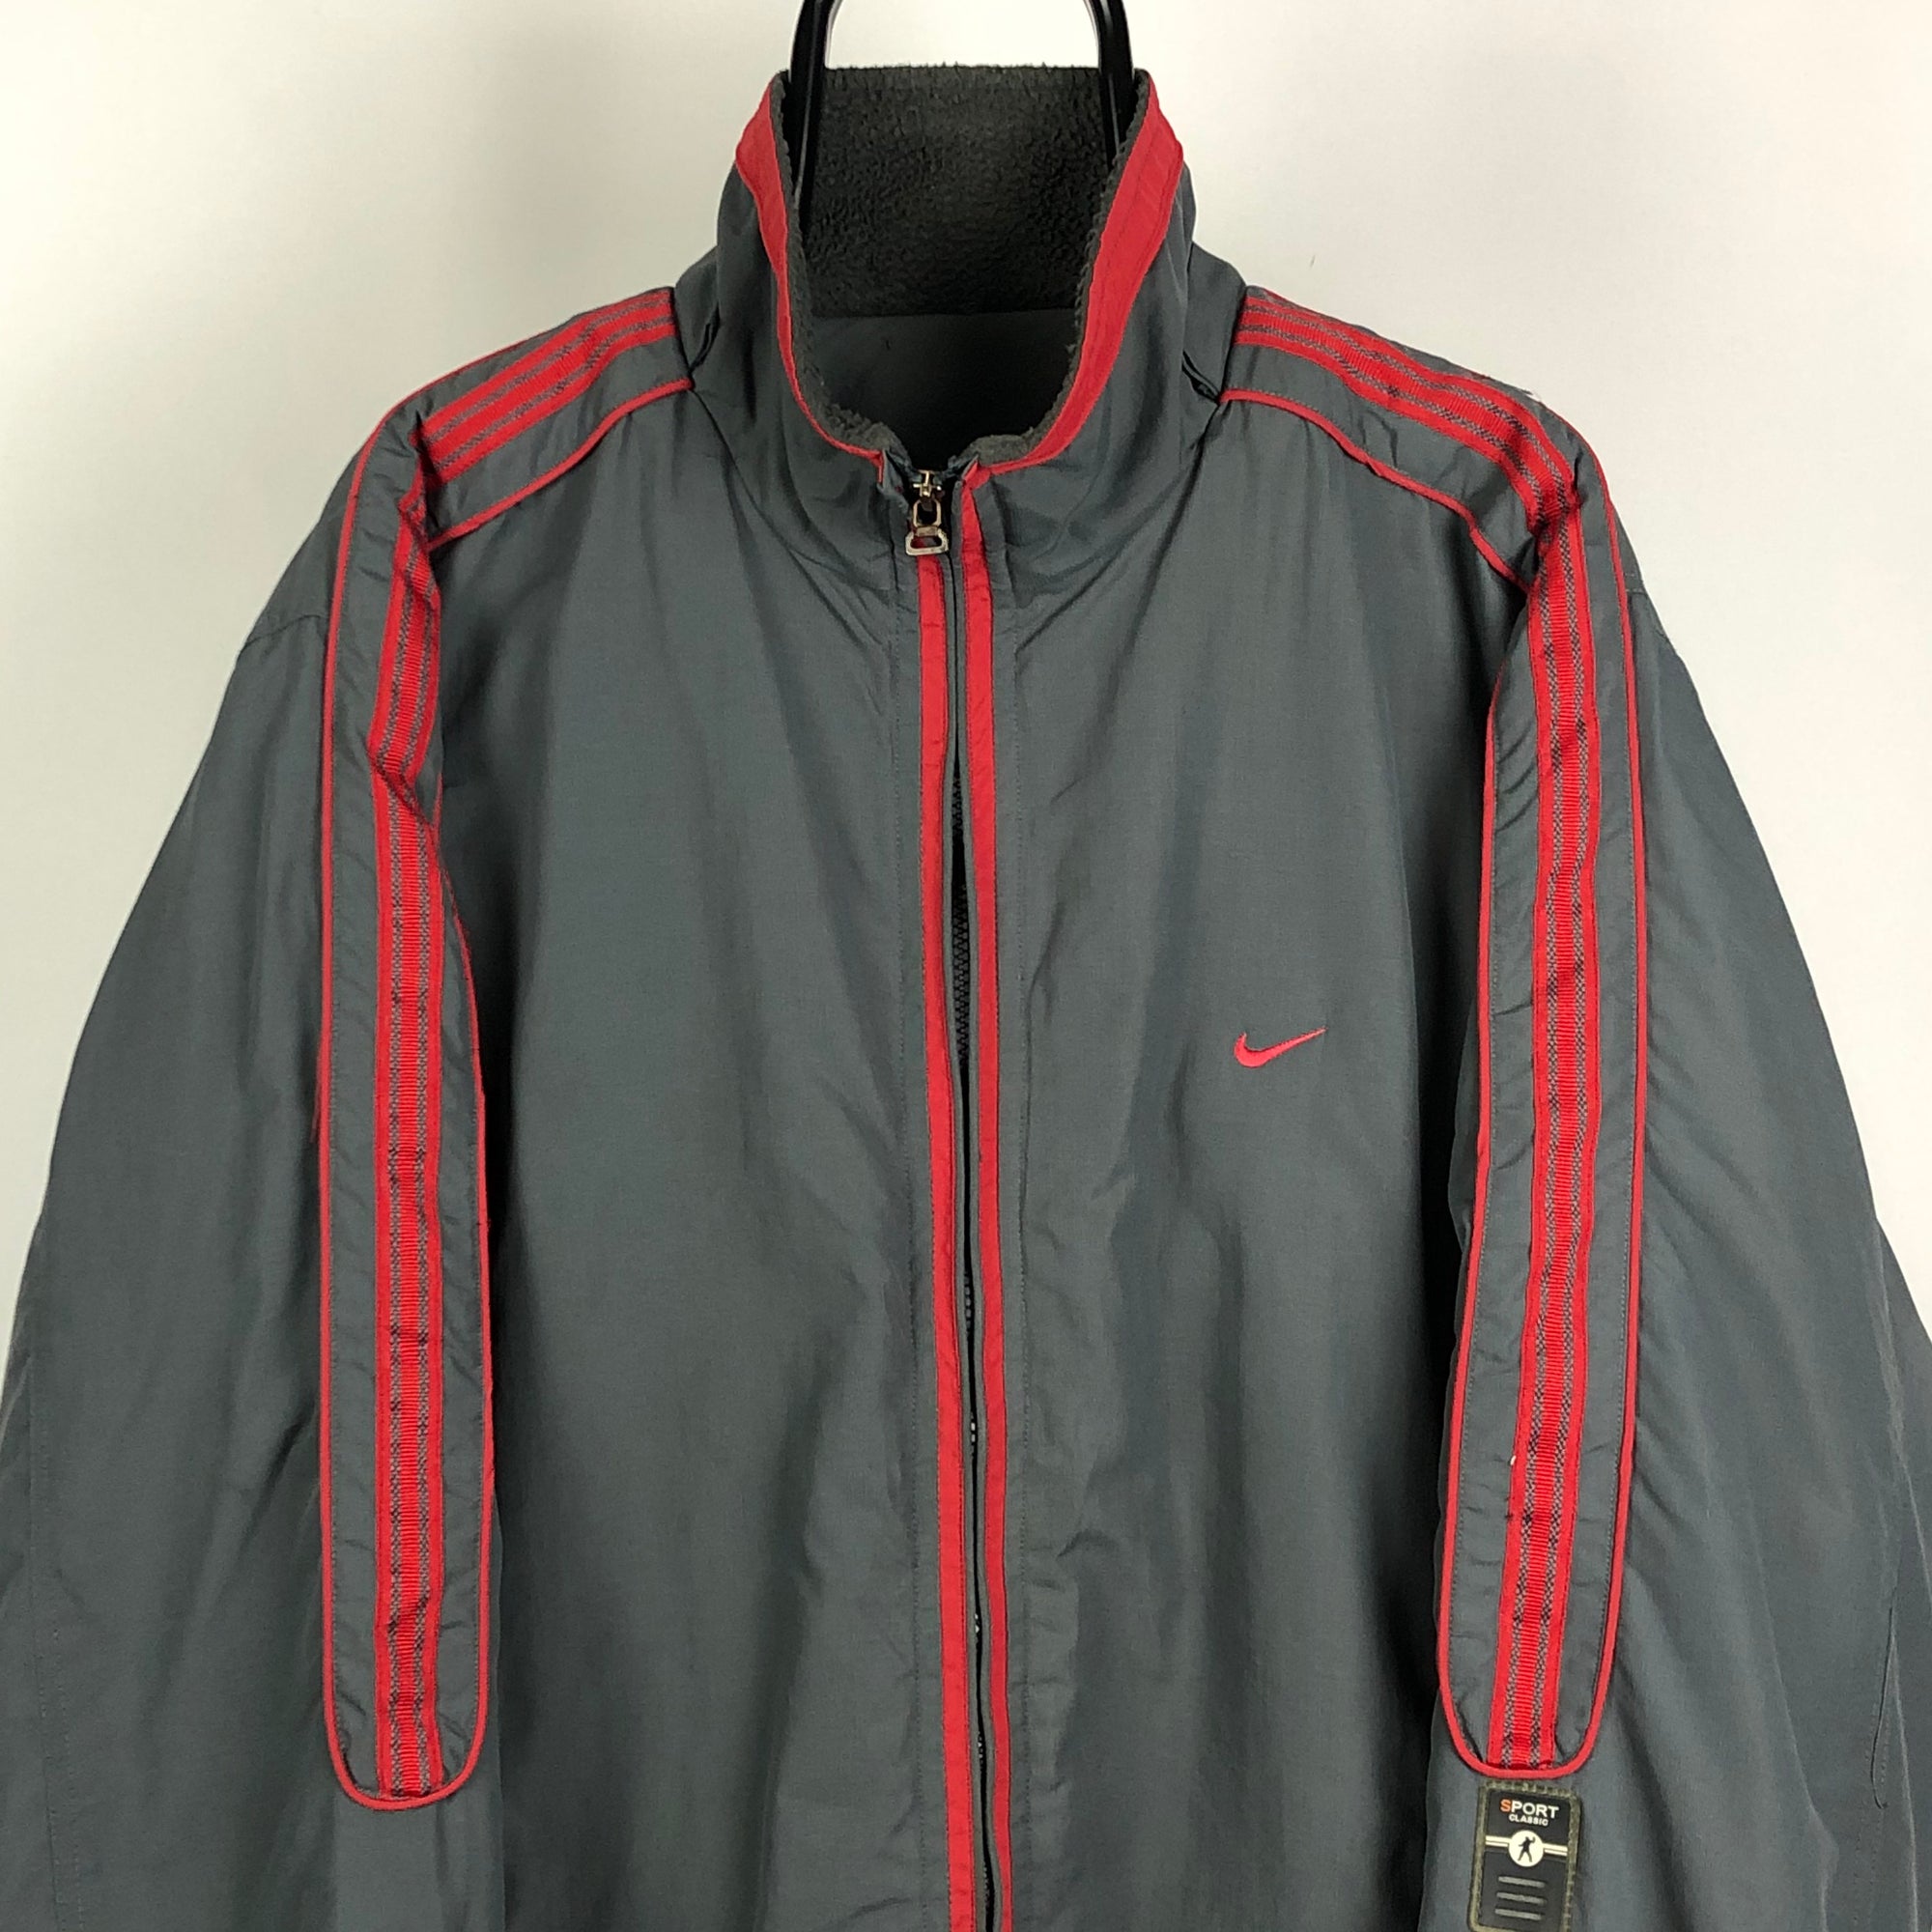 Vintage Nike Coat in Red/Grey - Men's Large/Women's XL